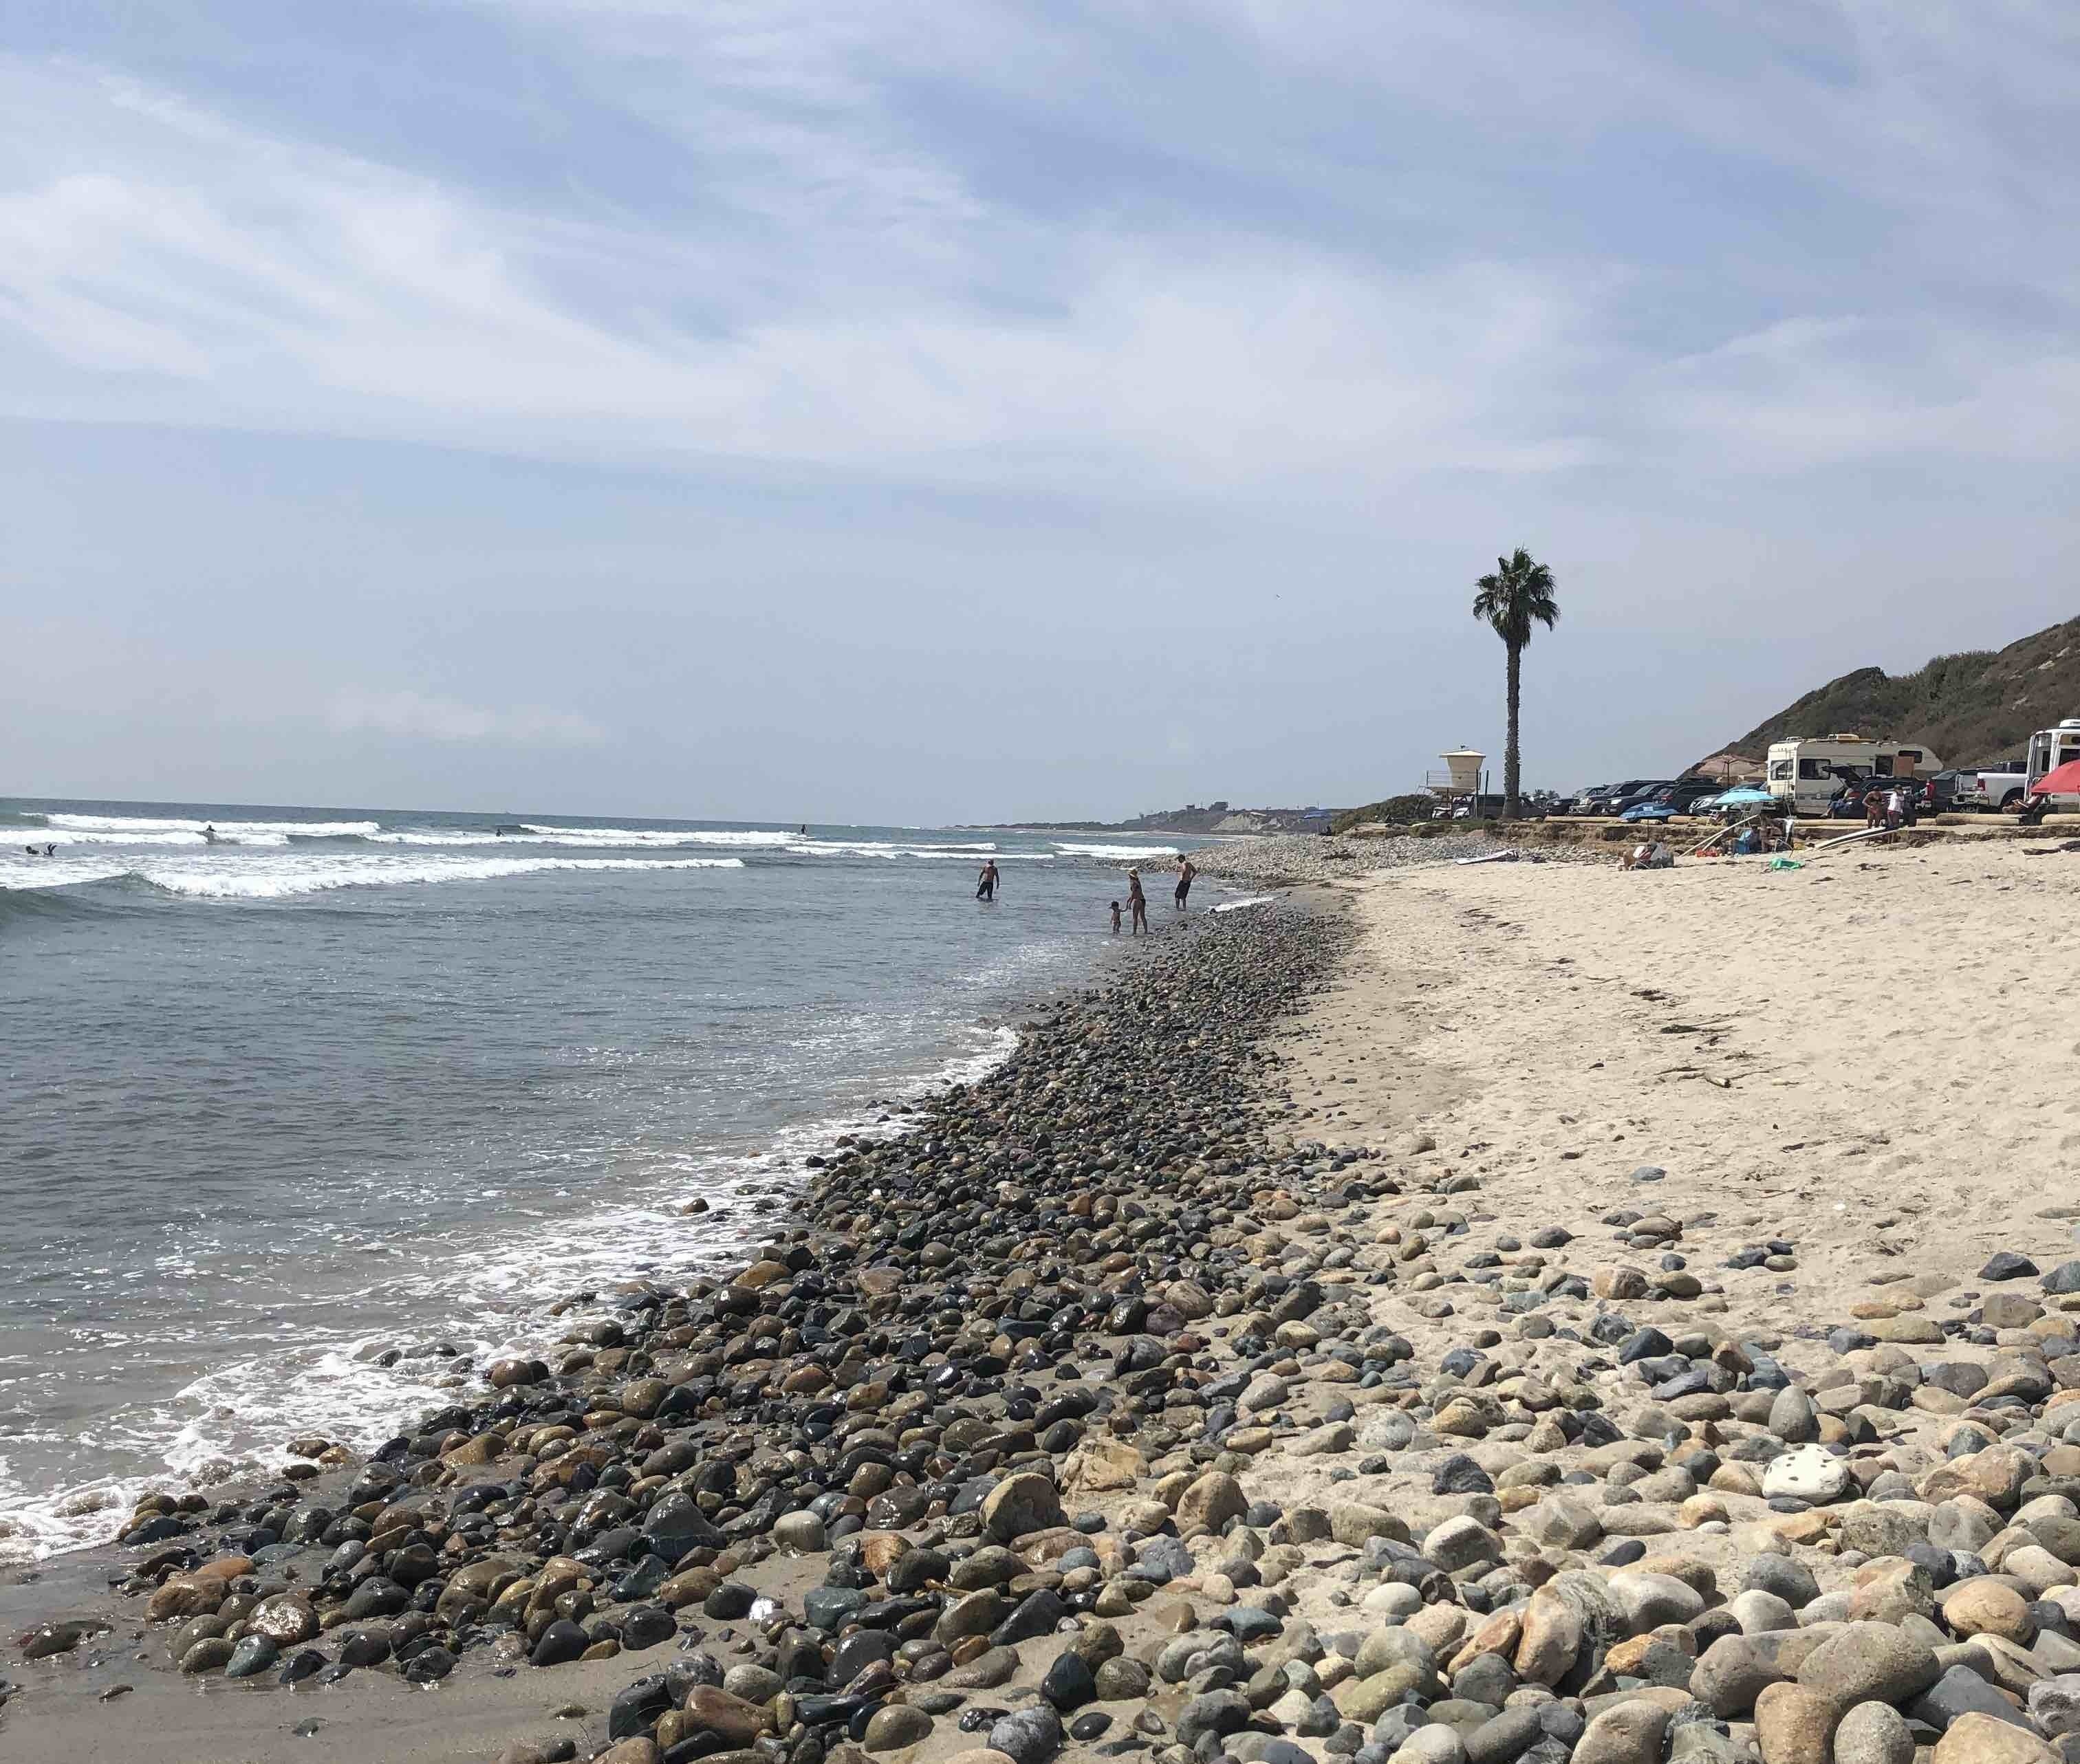 California beach dayz - a little rocky, but warm sand and surfing. Gotta love it 
August 2018